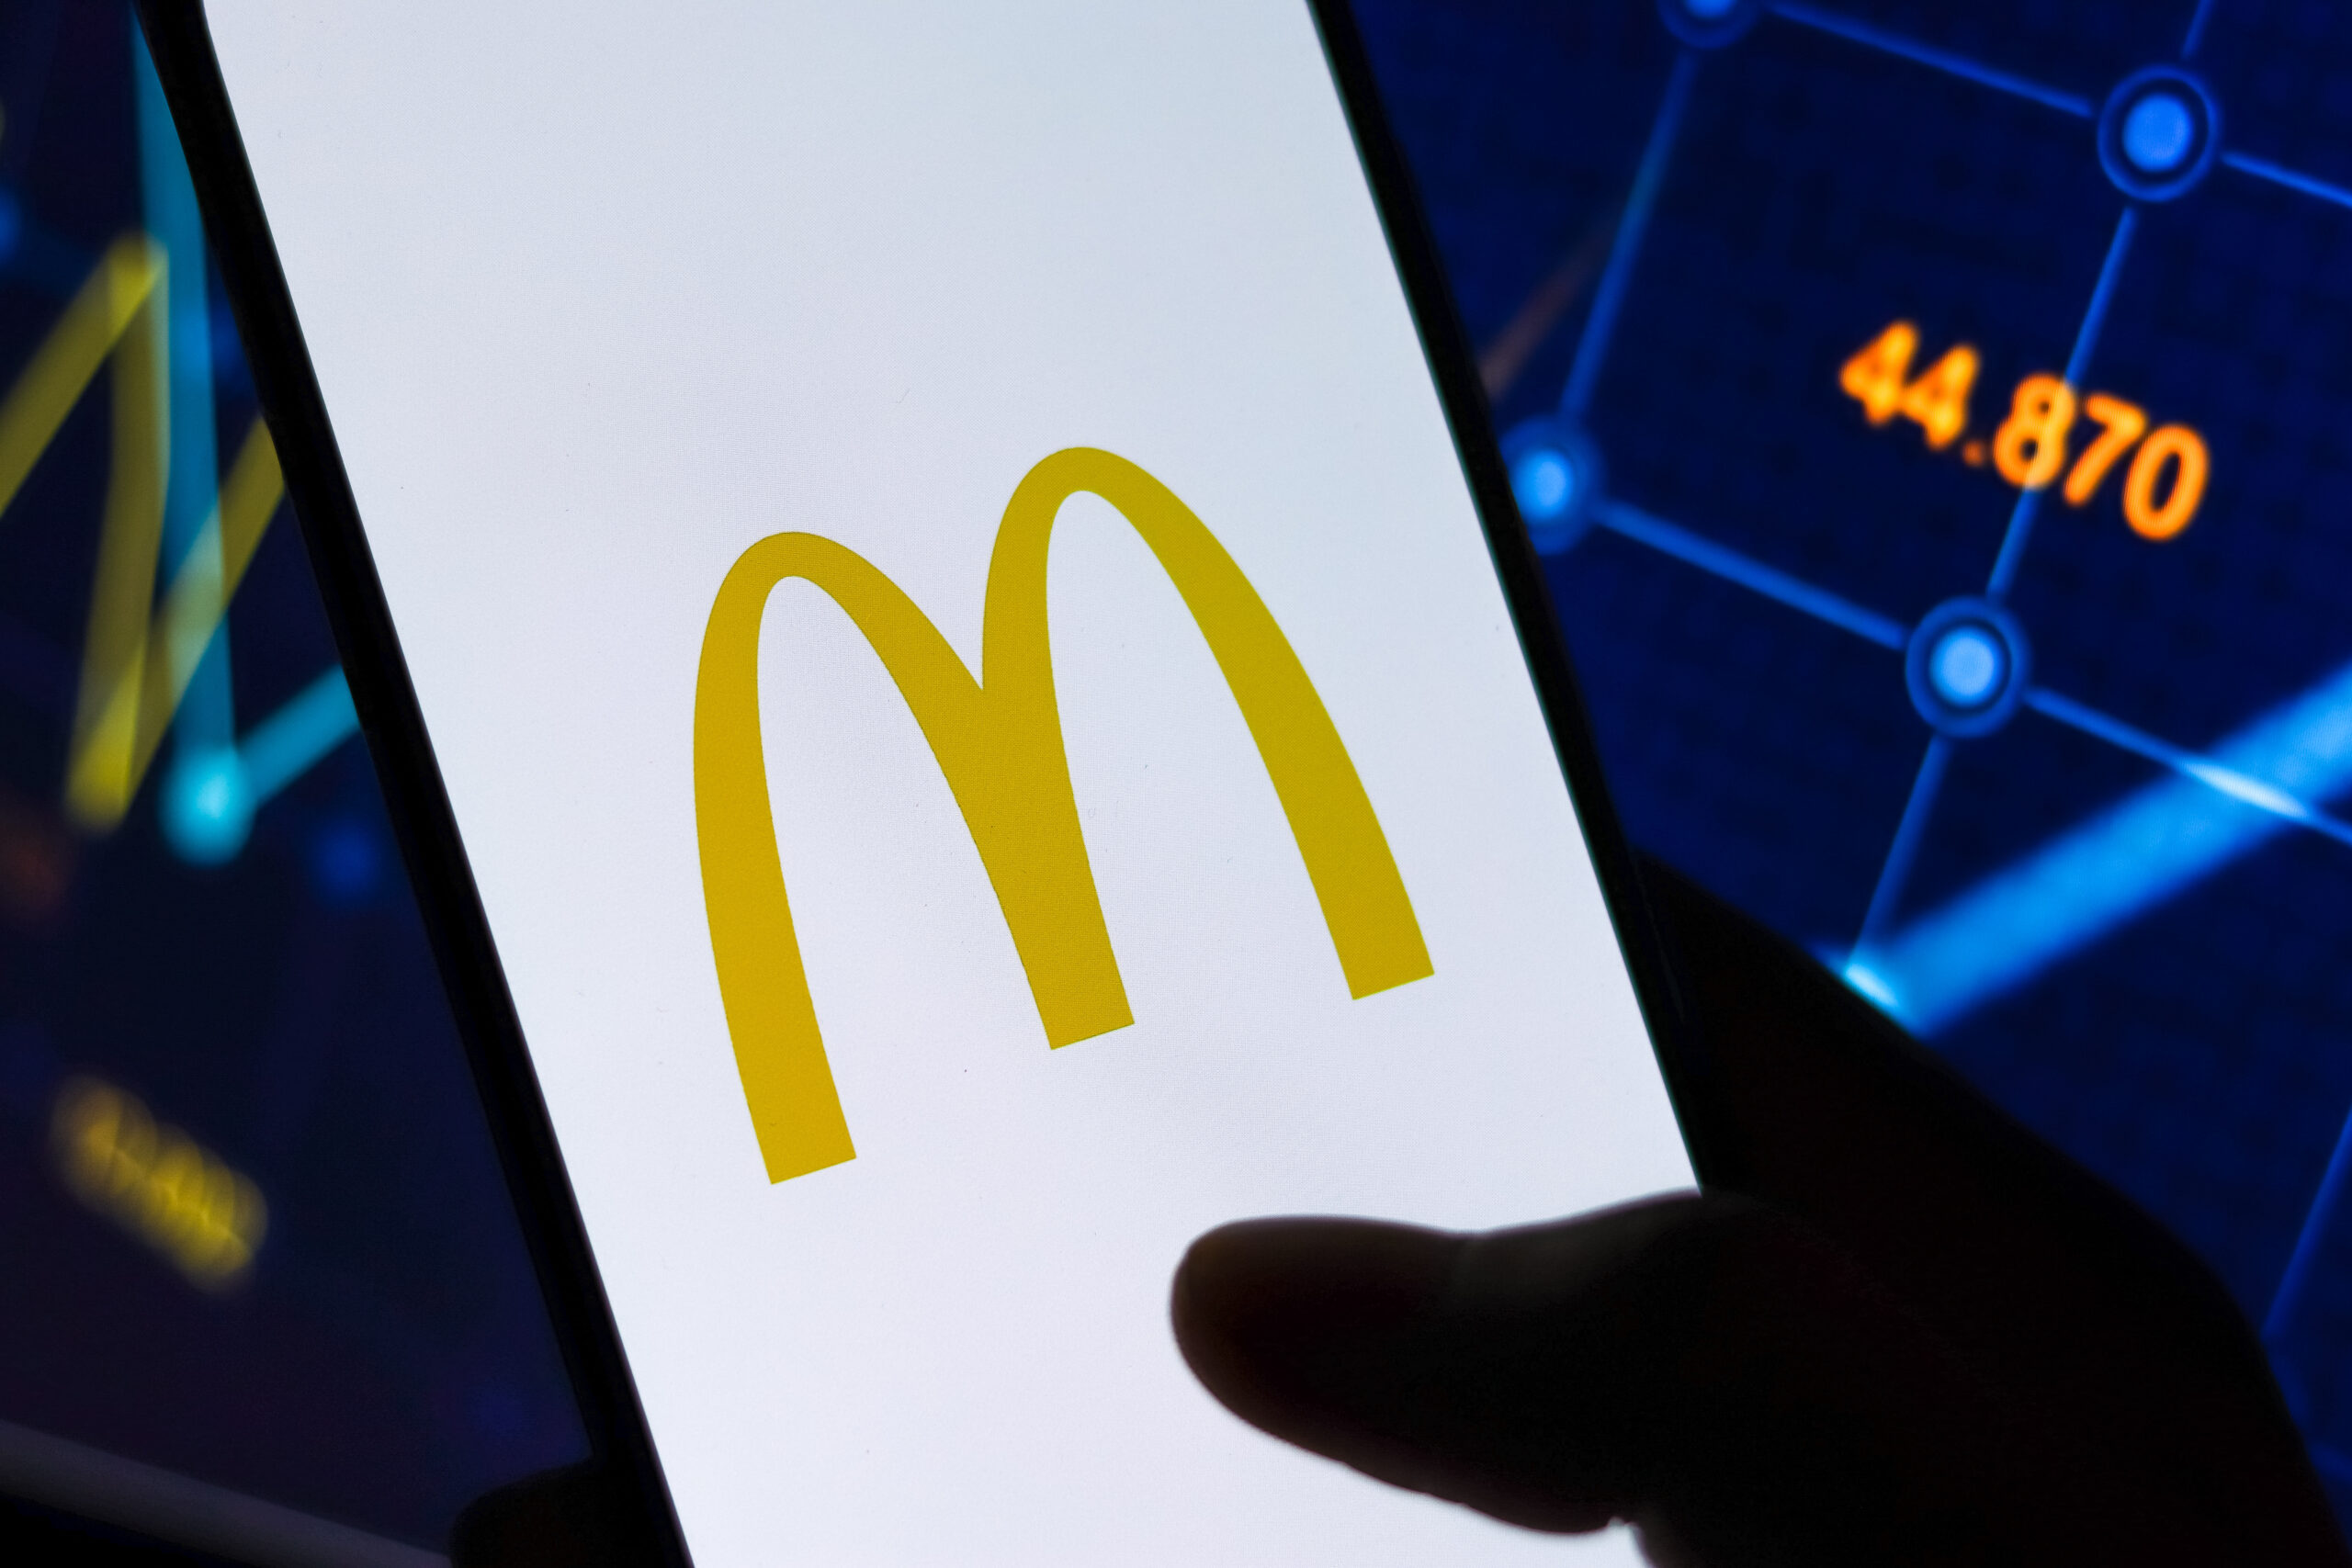 McDonalds-Pricing-Strategy-McDonalds-Logo-On-Smartphone